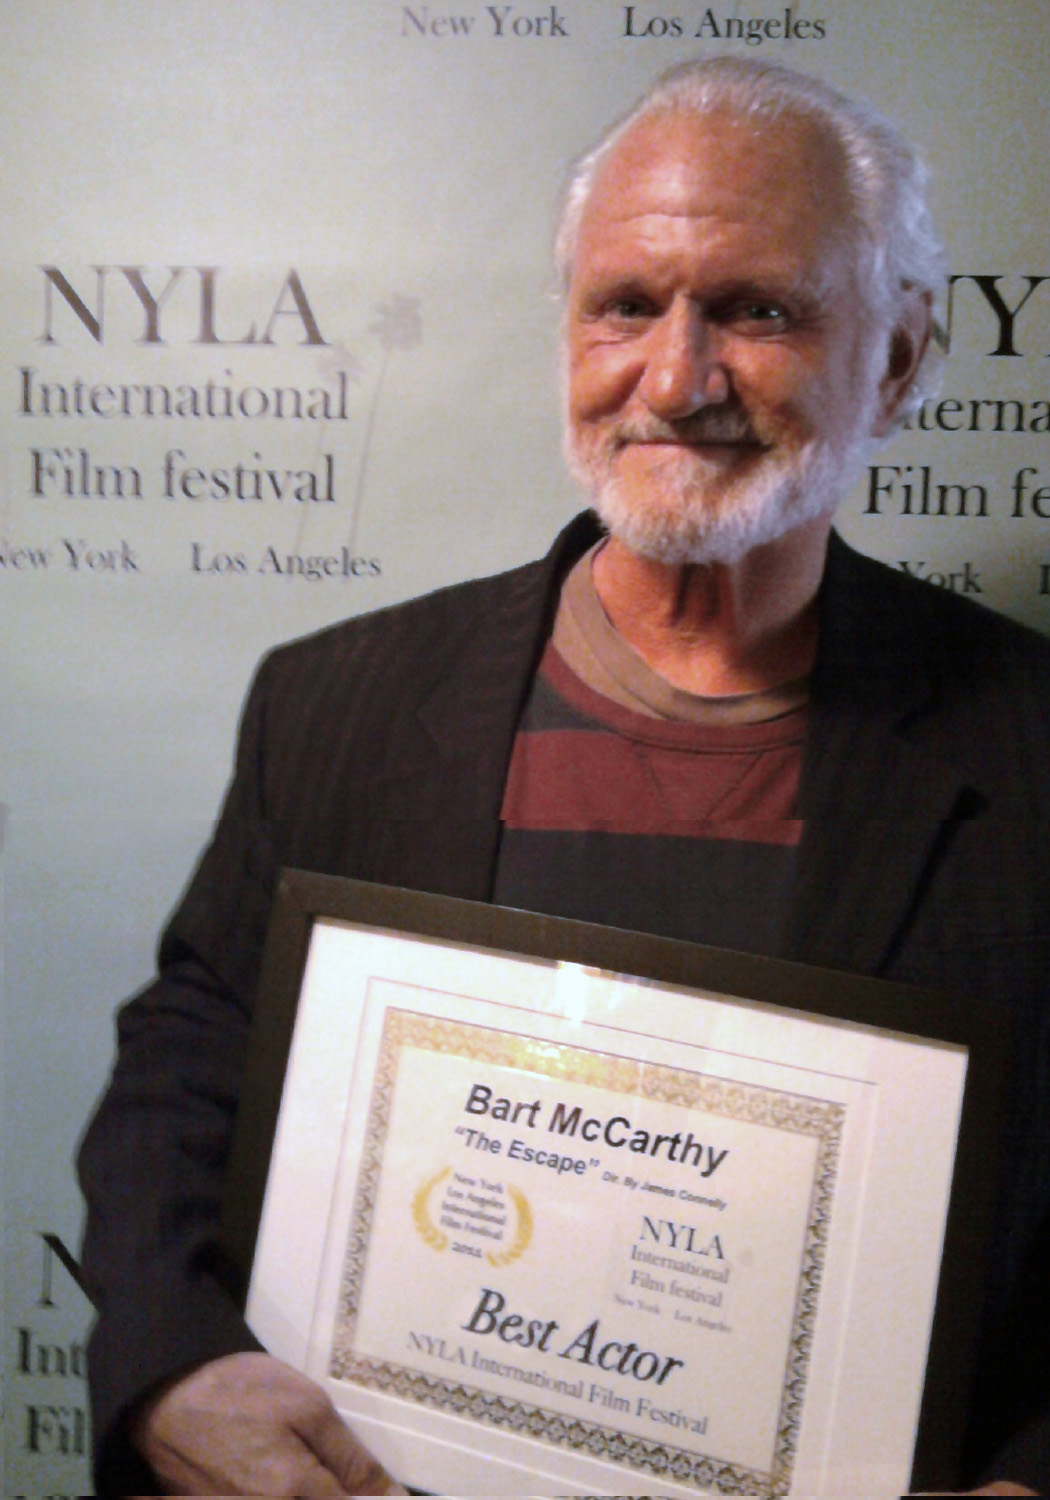 Best Actor Award at New York - Los Angeles International Film Festival.